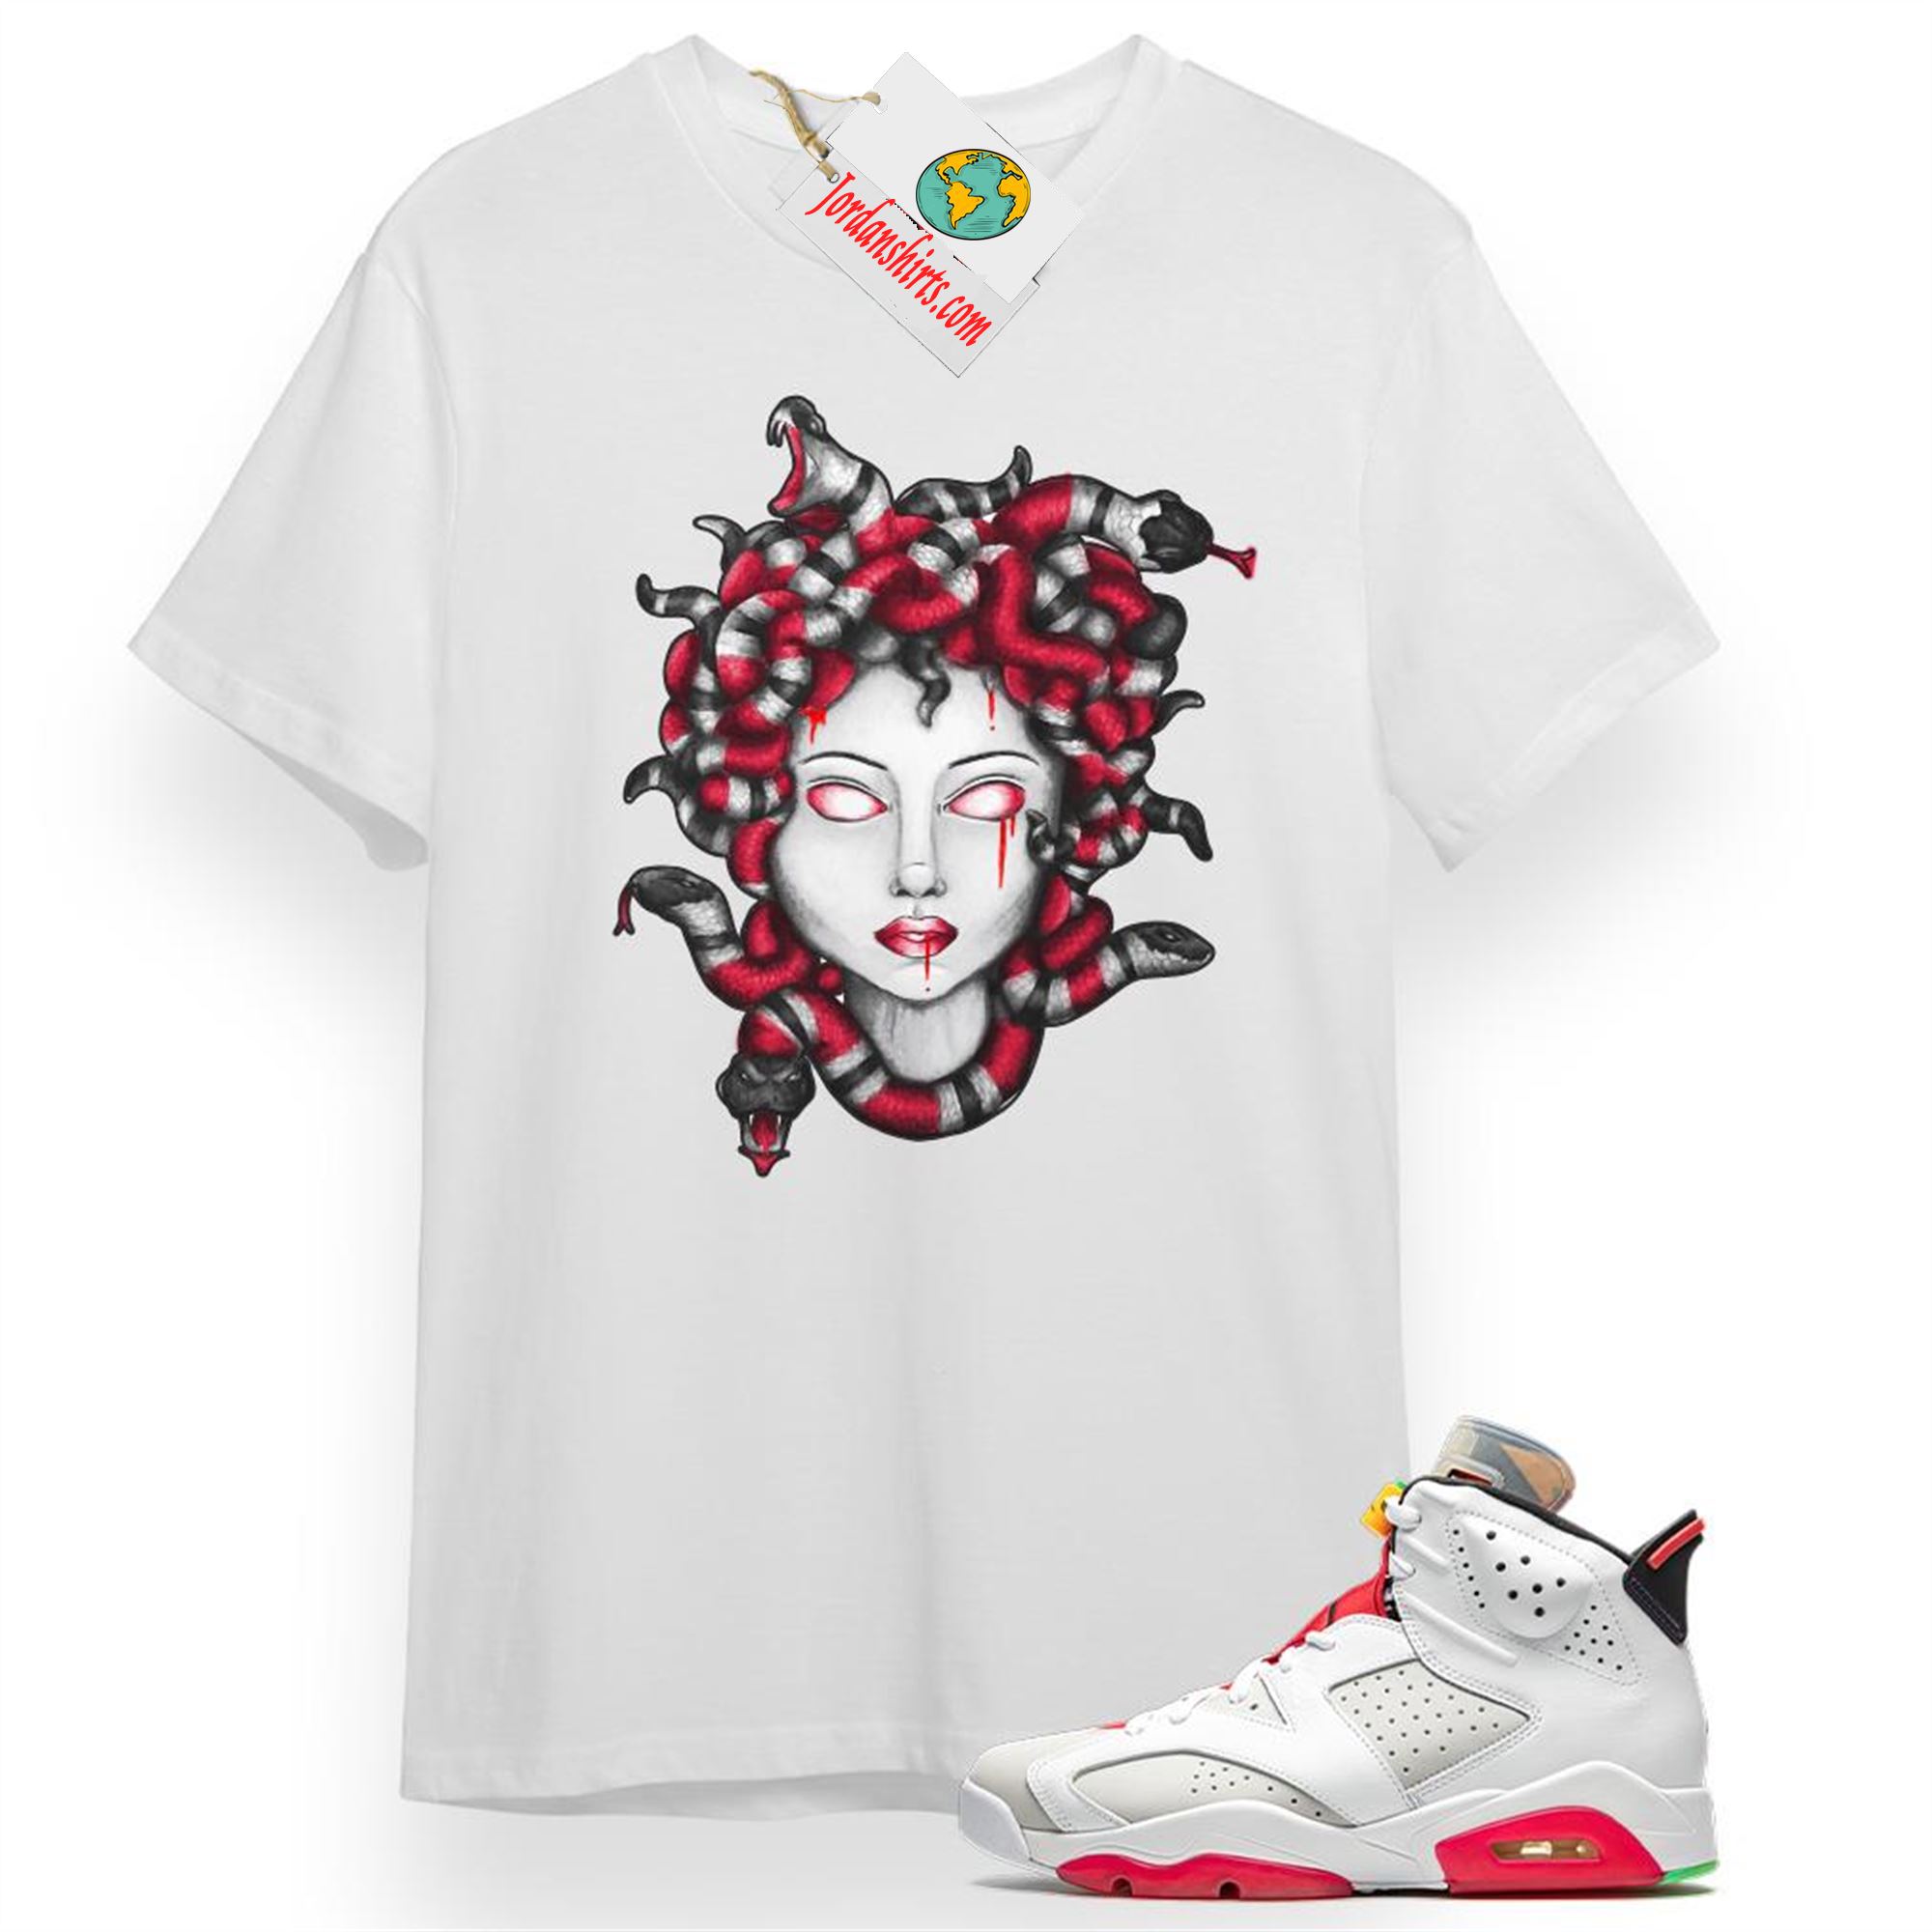 Jordan 6 Shirt, Medusa Snake White T-shirt Air Jordan 6 Hare 6s Plus Size Up To 5xl